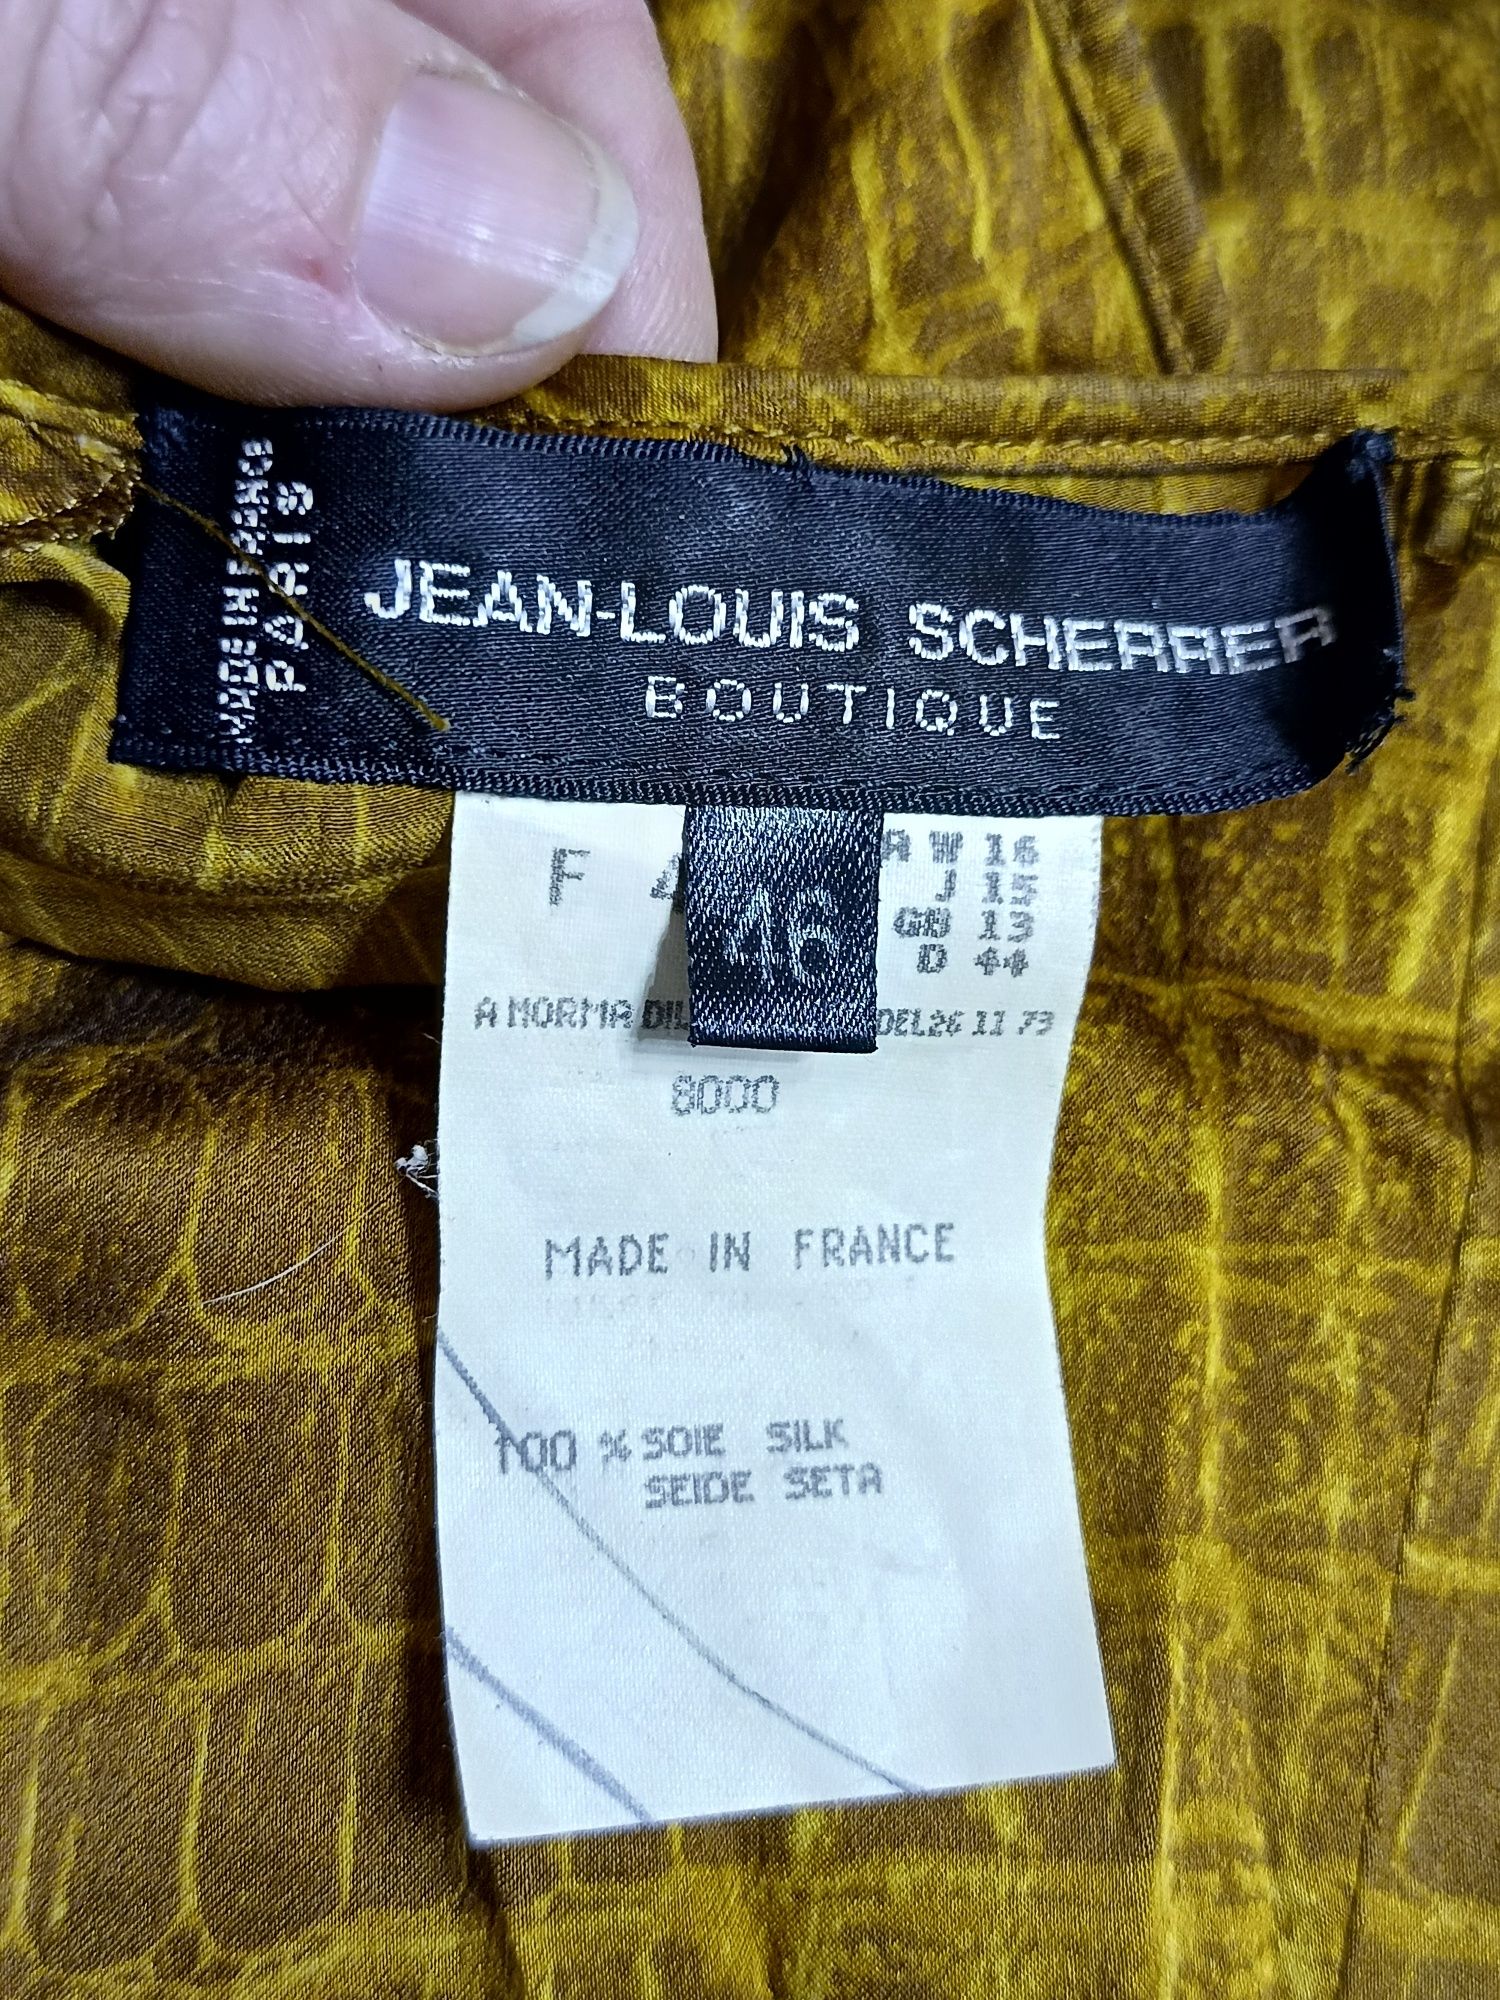 Jean Louis scherrer boutique шелк Франція, блузка винтажная маленькая